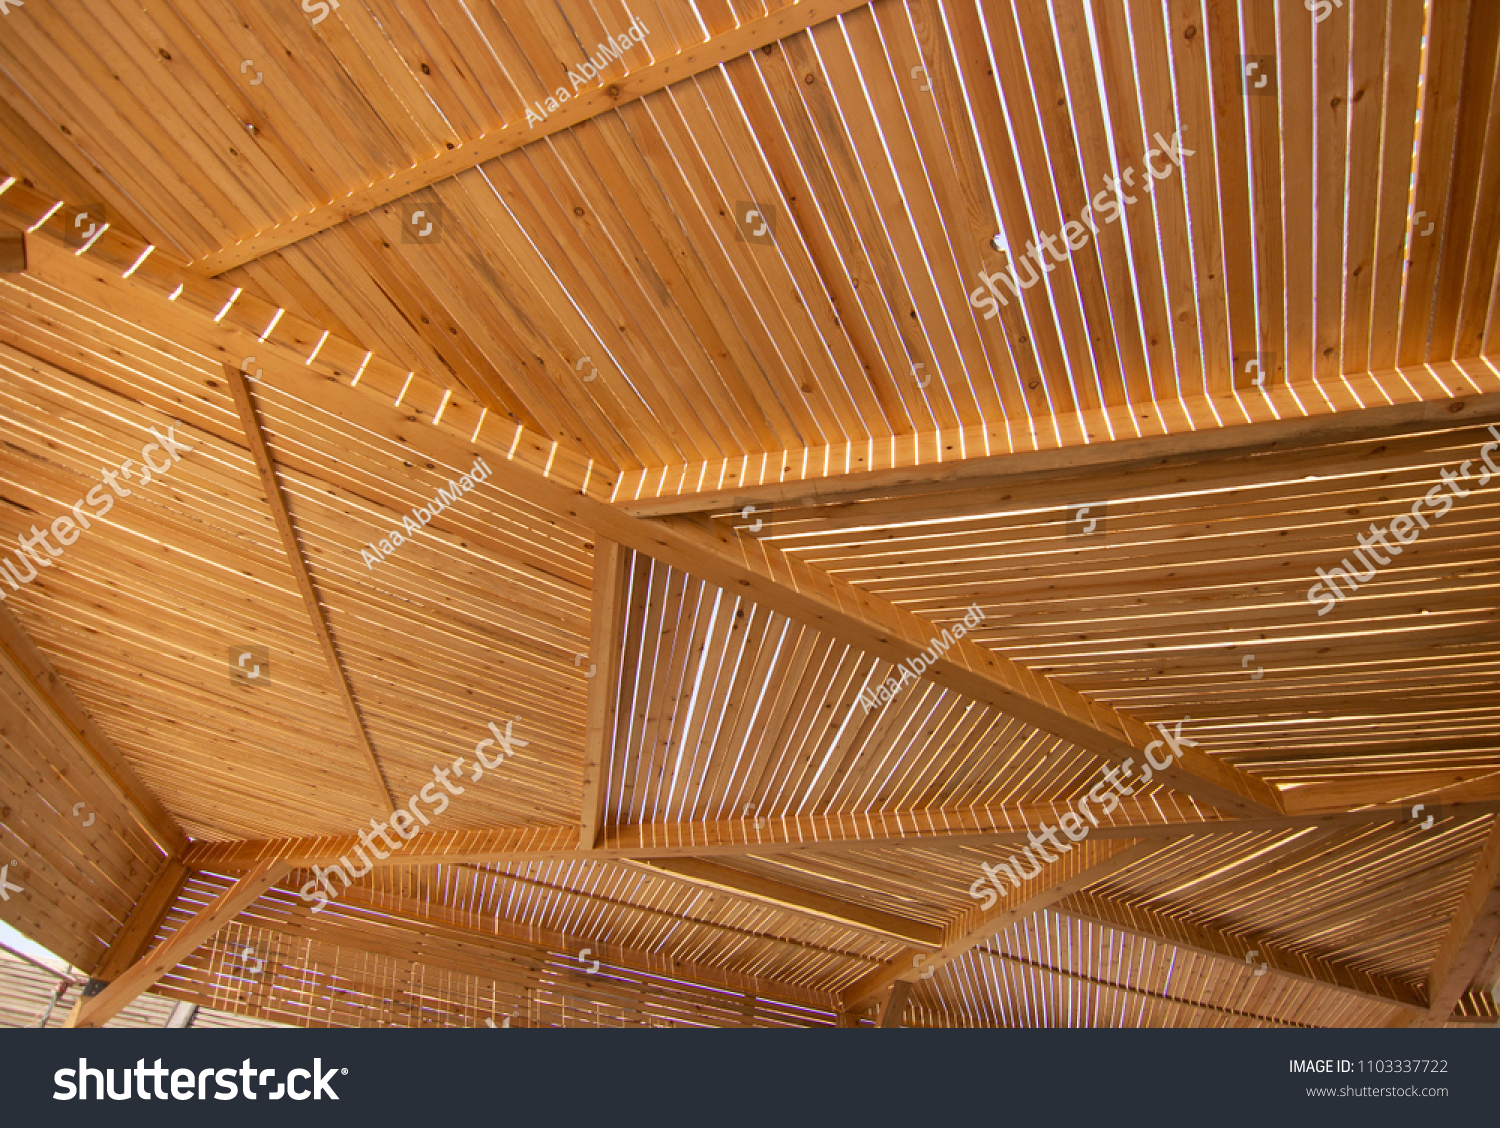 Pergola Wood Outdoor Ceiling Stock Photo Edit Now 1103337722